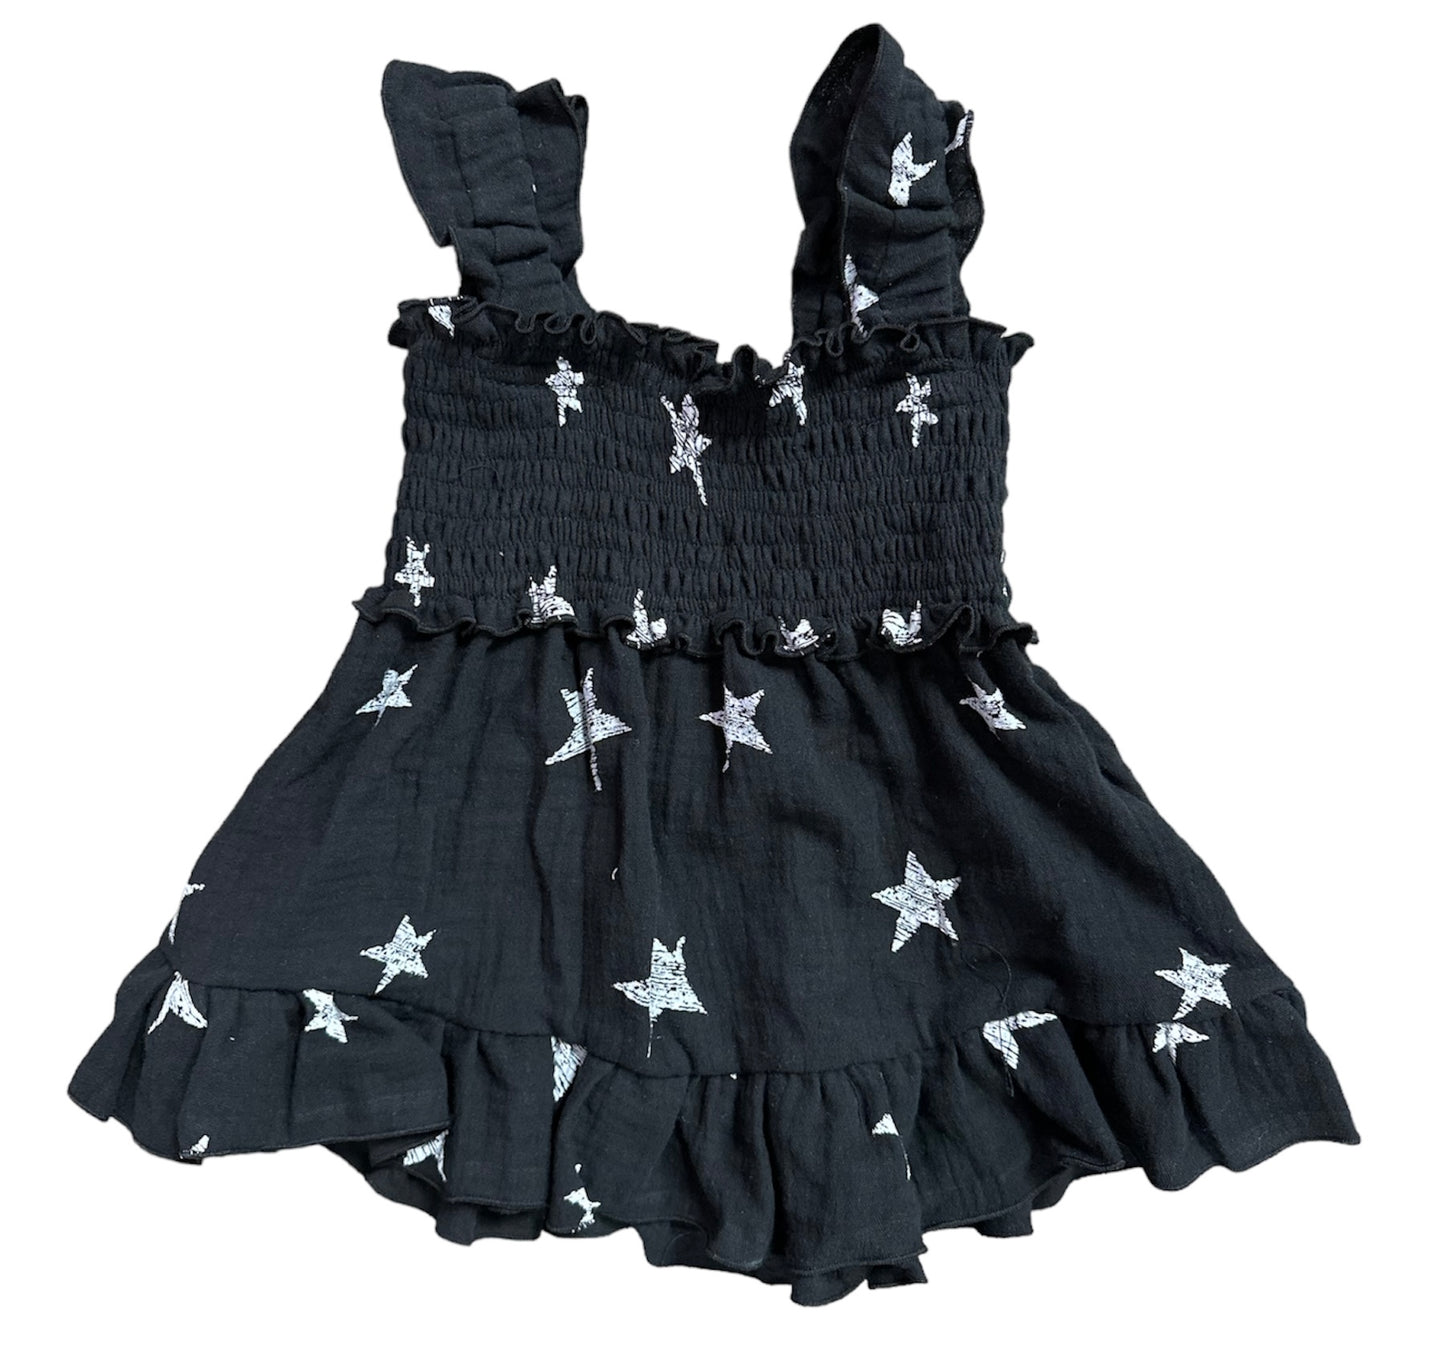 Black and white Star dress